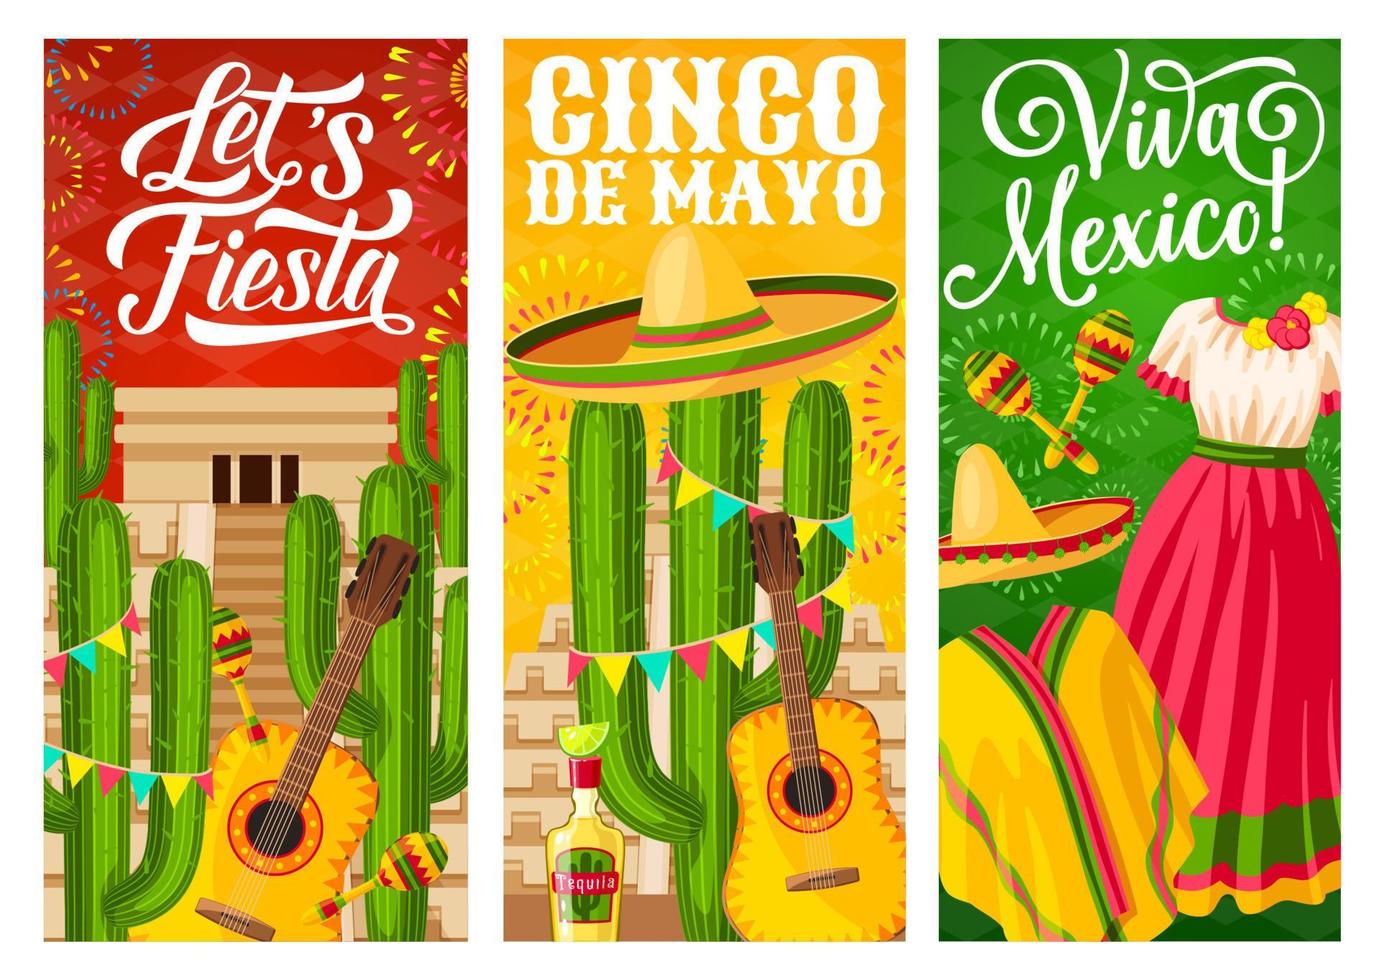 Mexican holiday Cinco de Mayo fiesta banners vector